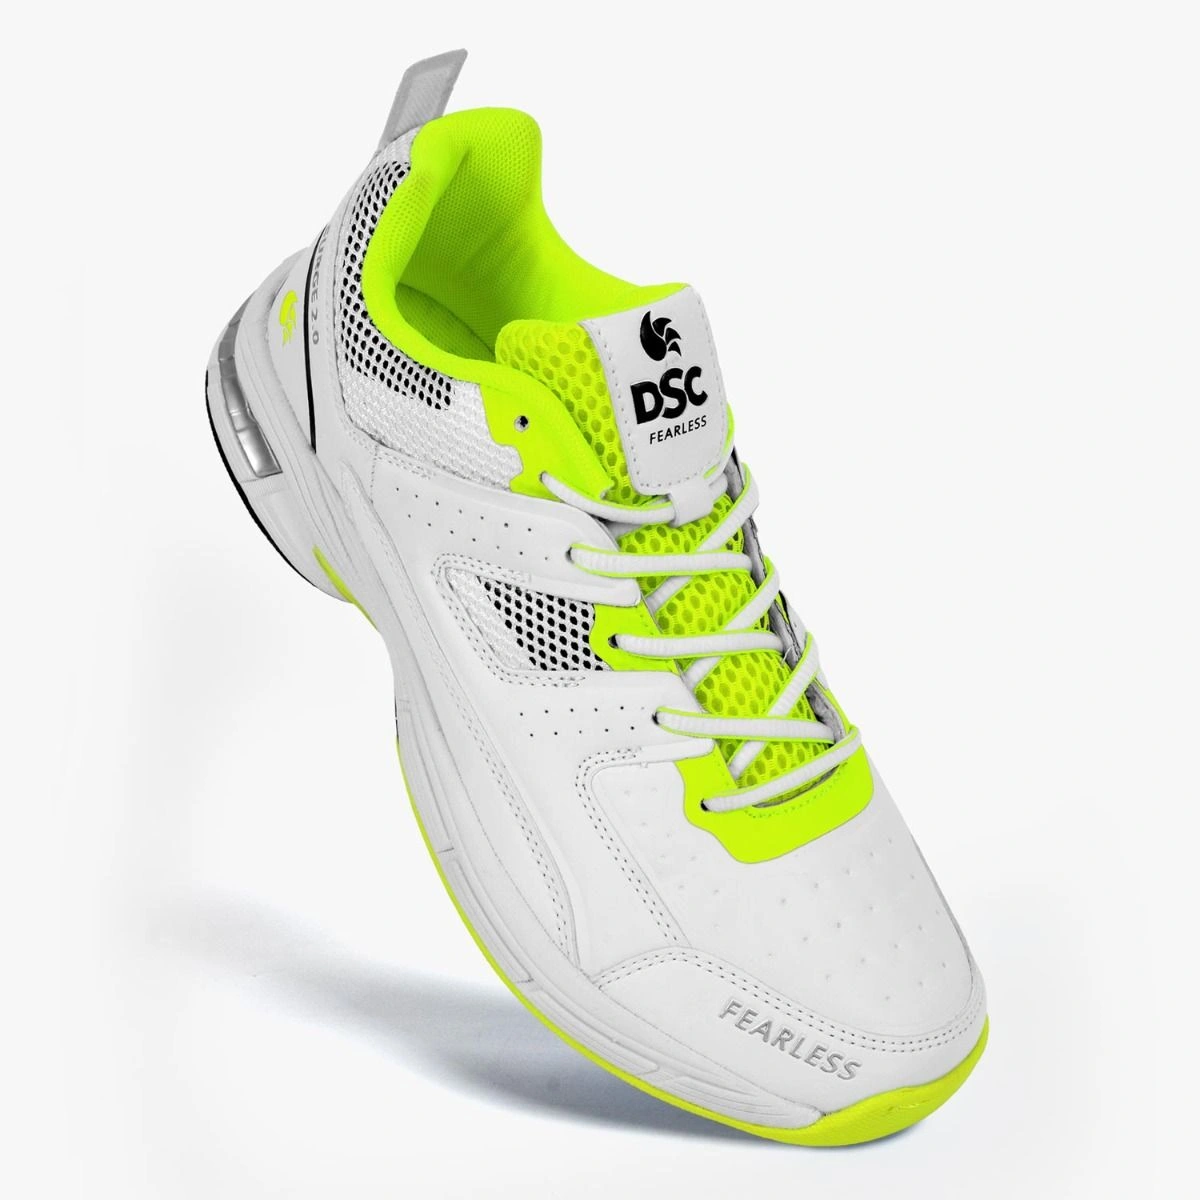 DSC Surge 2.0 All Rounder Cricket Shoes for Men-WHITE-FLOROSENT-YELLOW-1-2